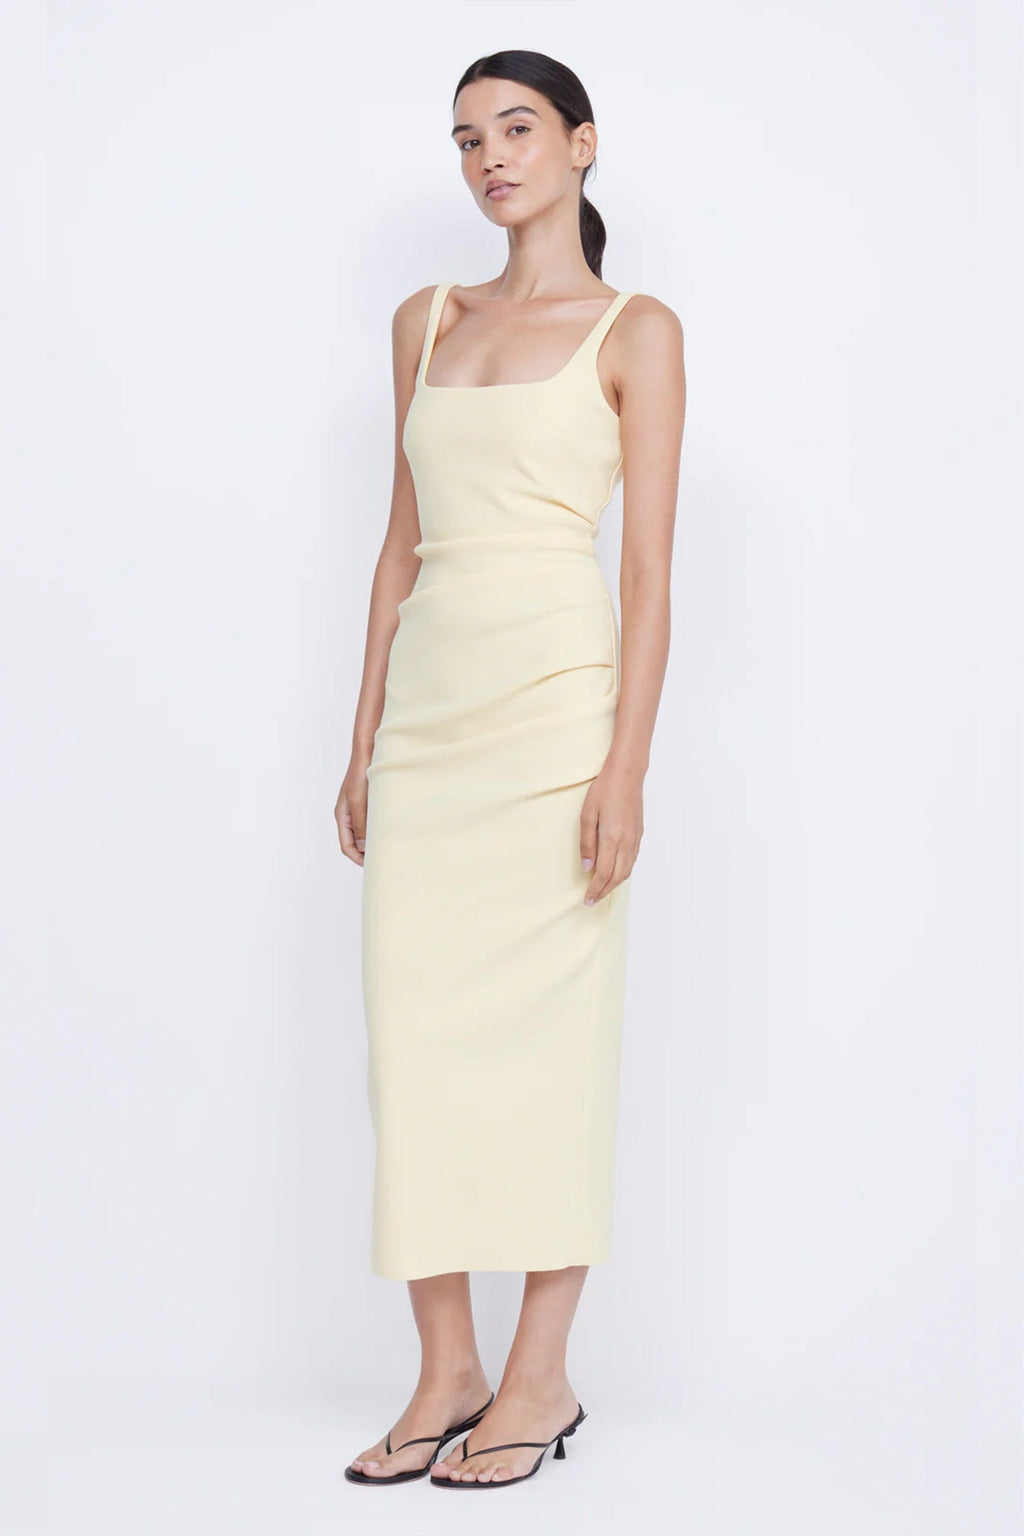 BEC + BRIDGE | Karina Tuck Midi Dress - Butter Yellow